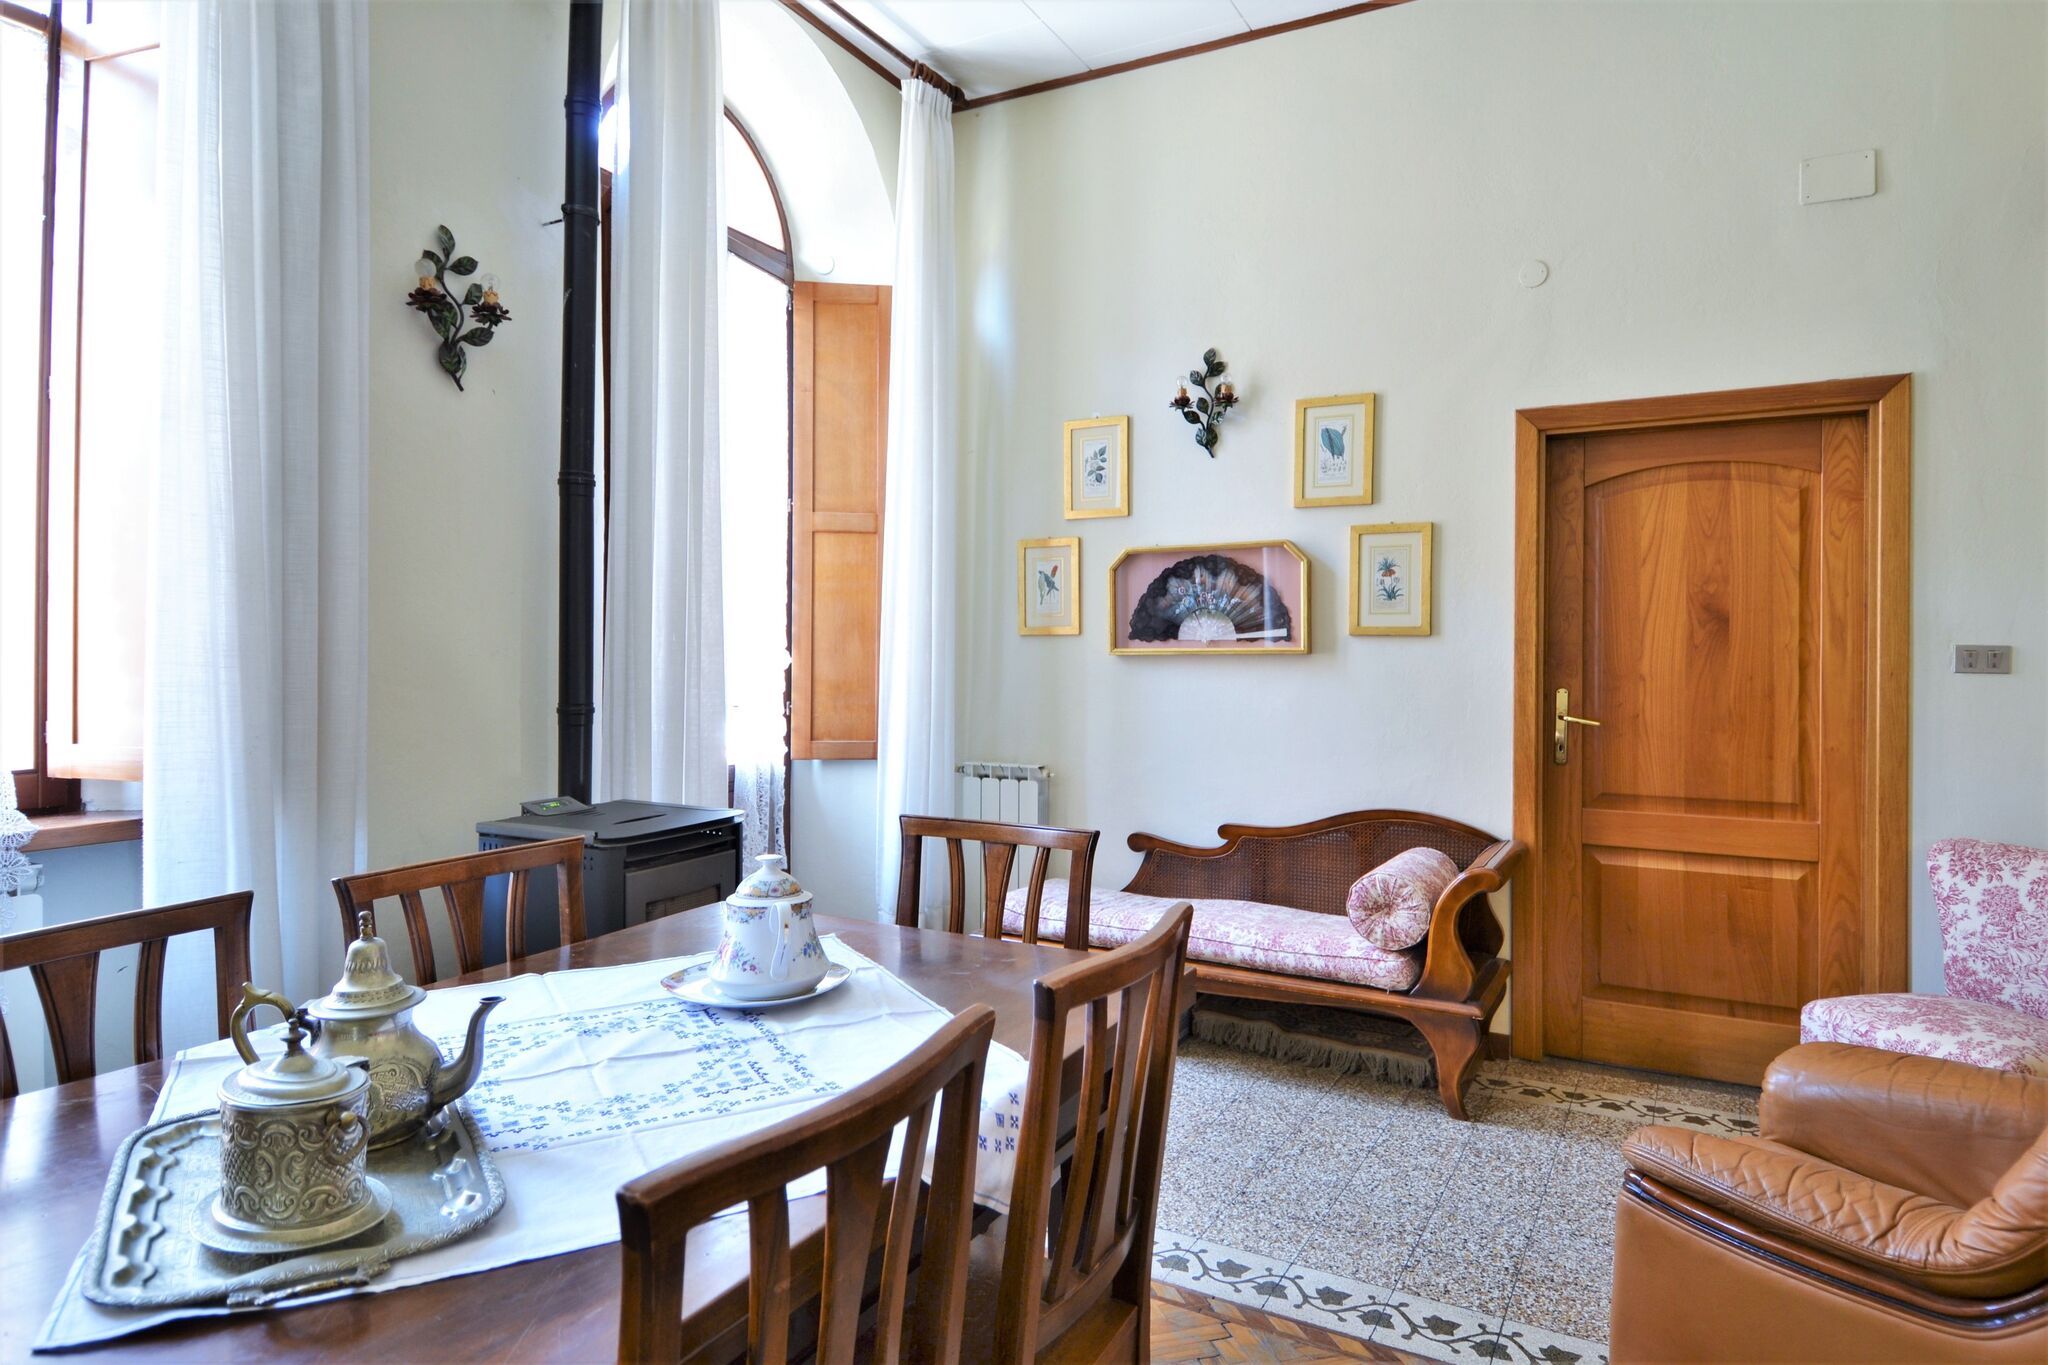 Elegant holiday home in the center of Fivizzano in Lunigiana